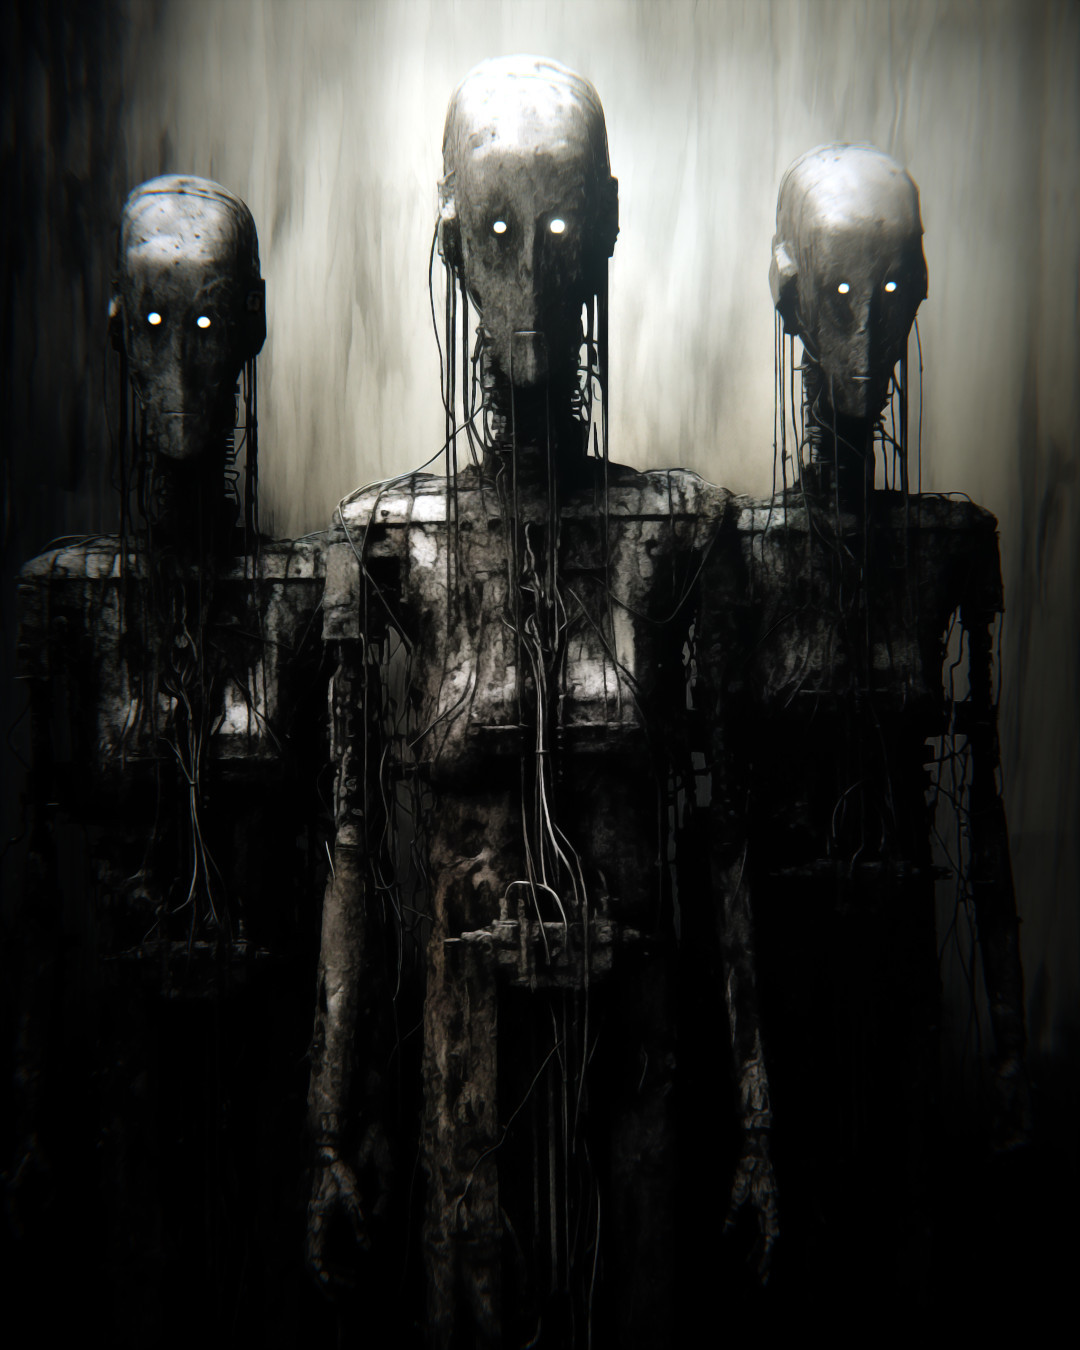 Three robots, dystopian realism, dark and ominous